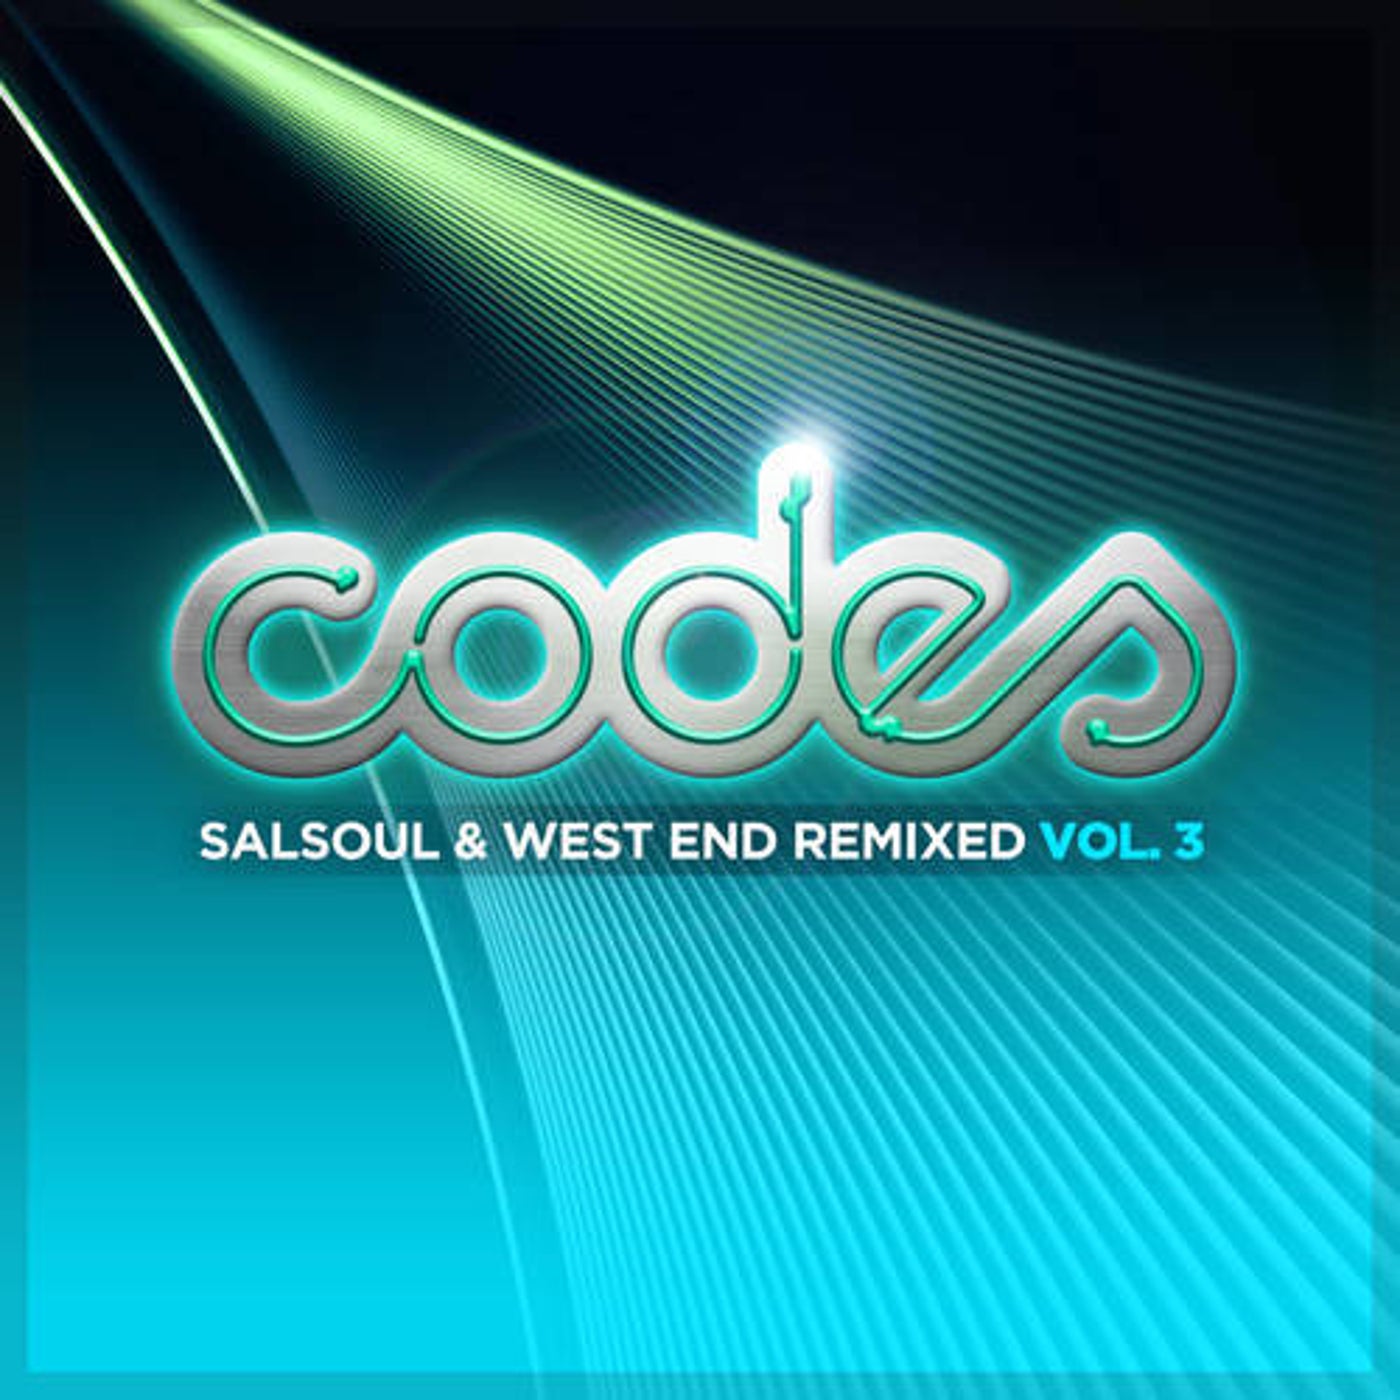 Salsoul & West End Remixed Vol. 3